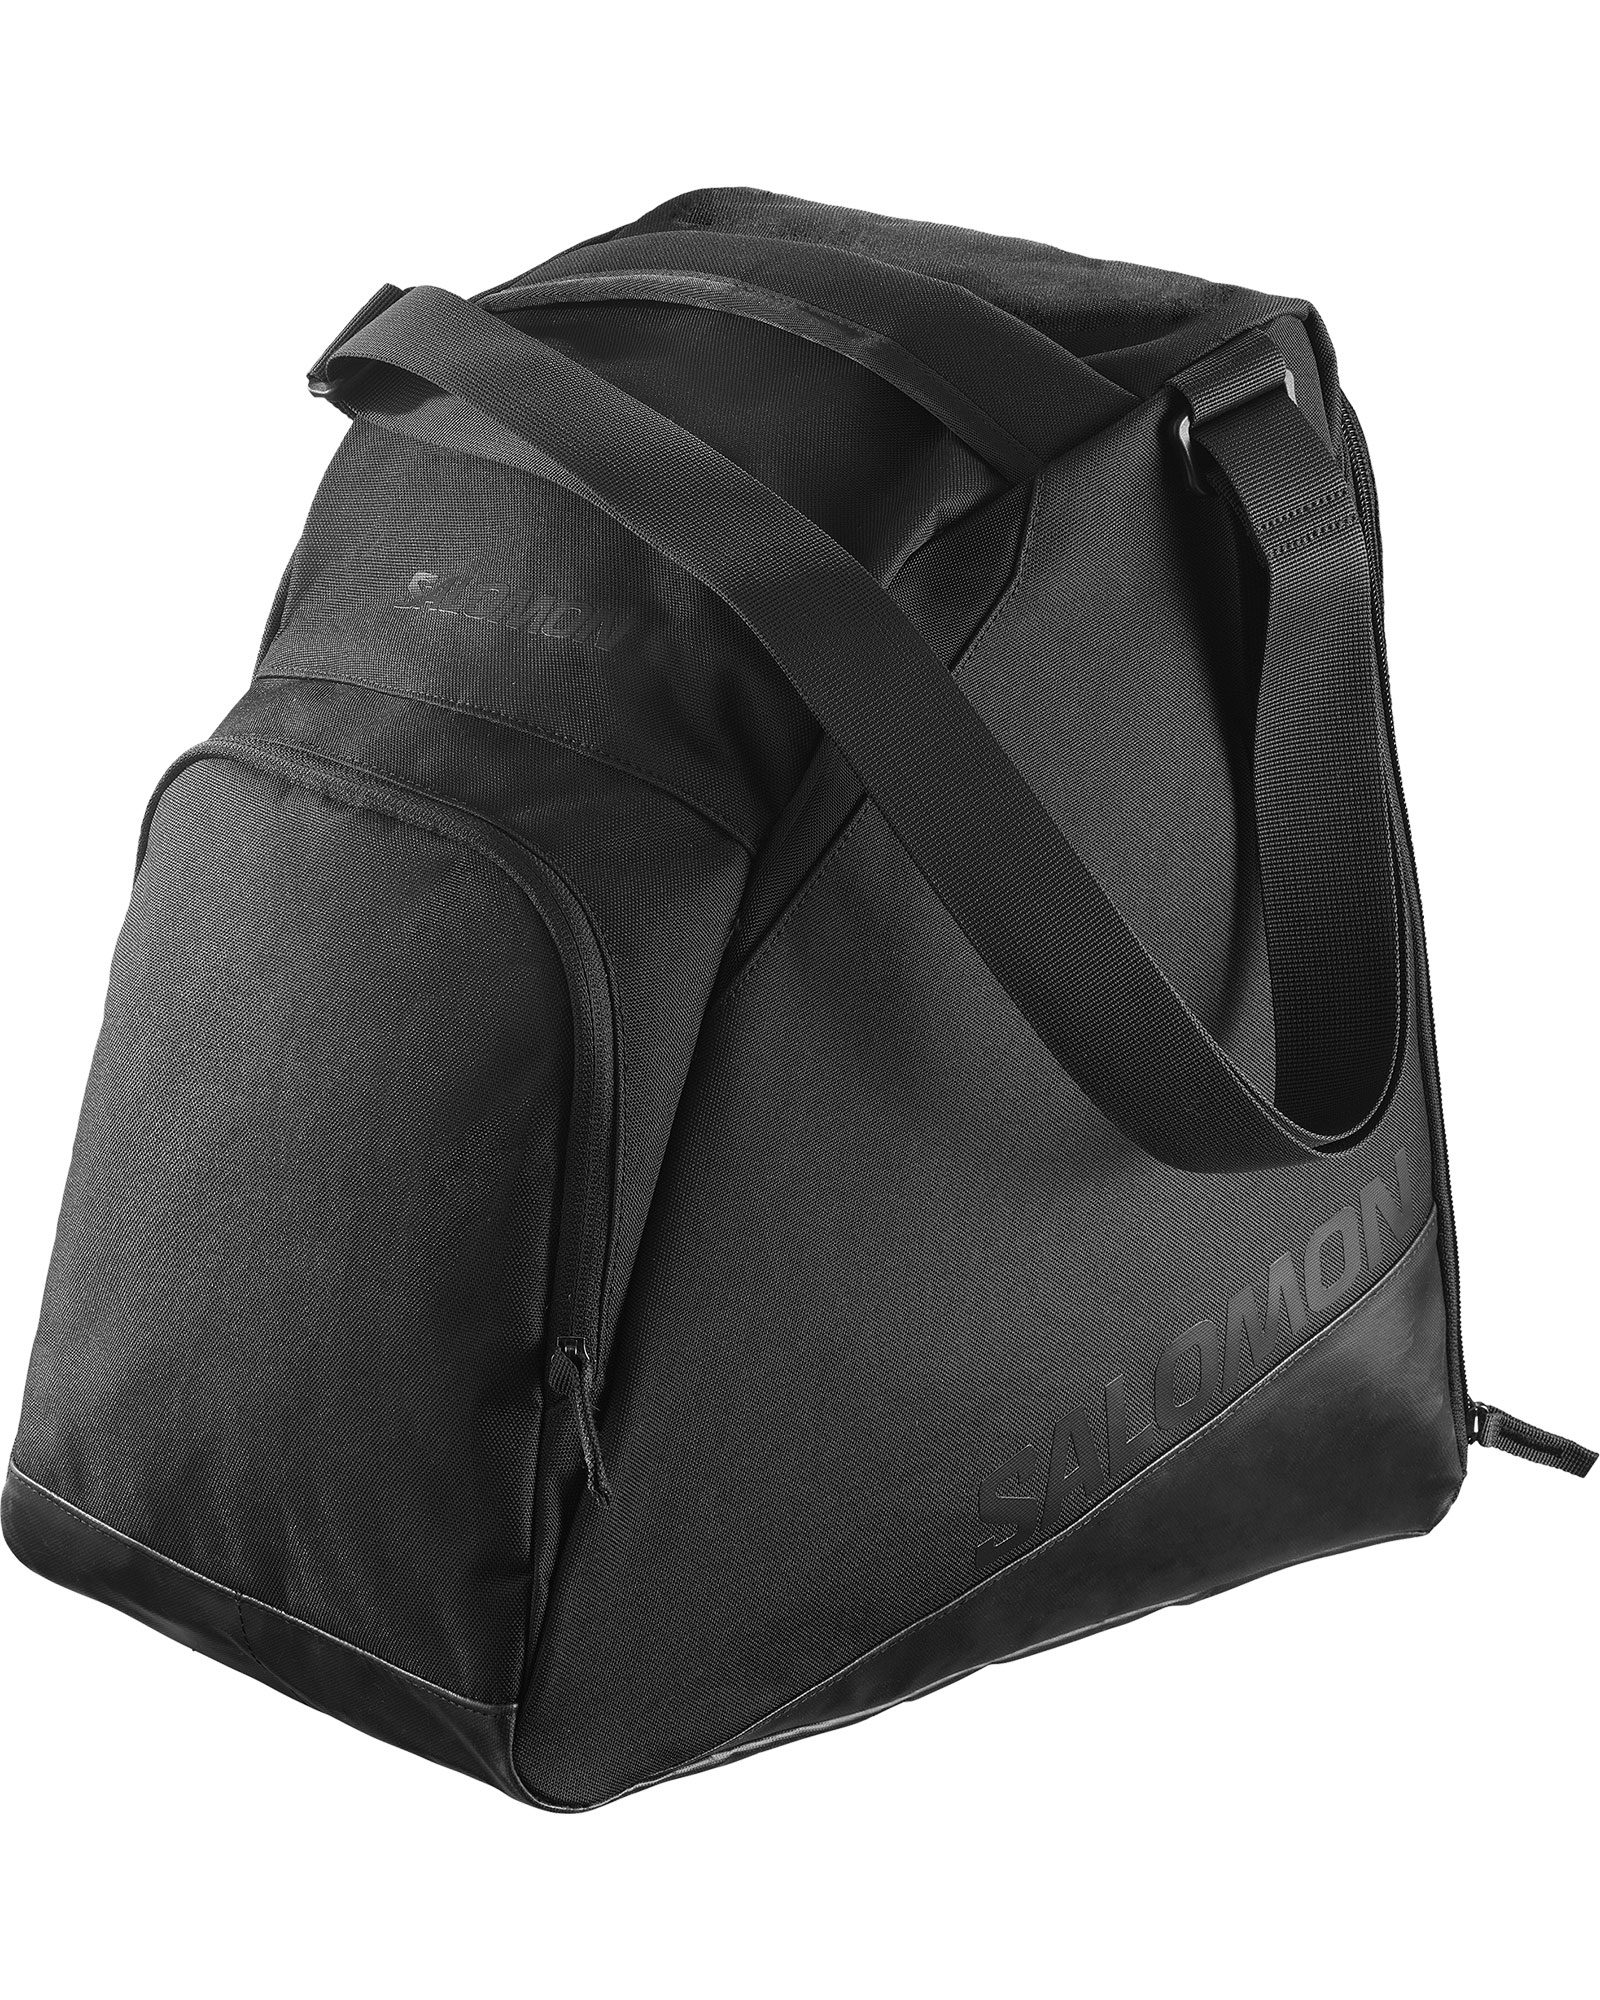 Salomon Original Gear Boot Bag - black